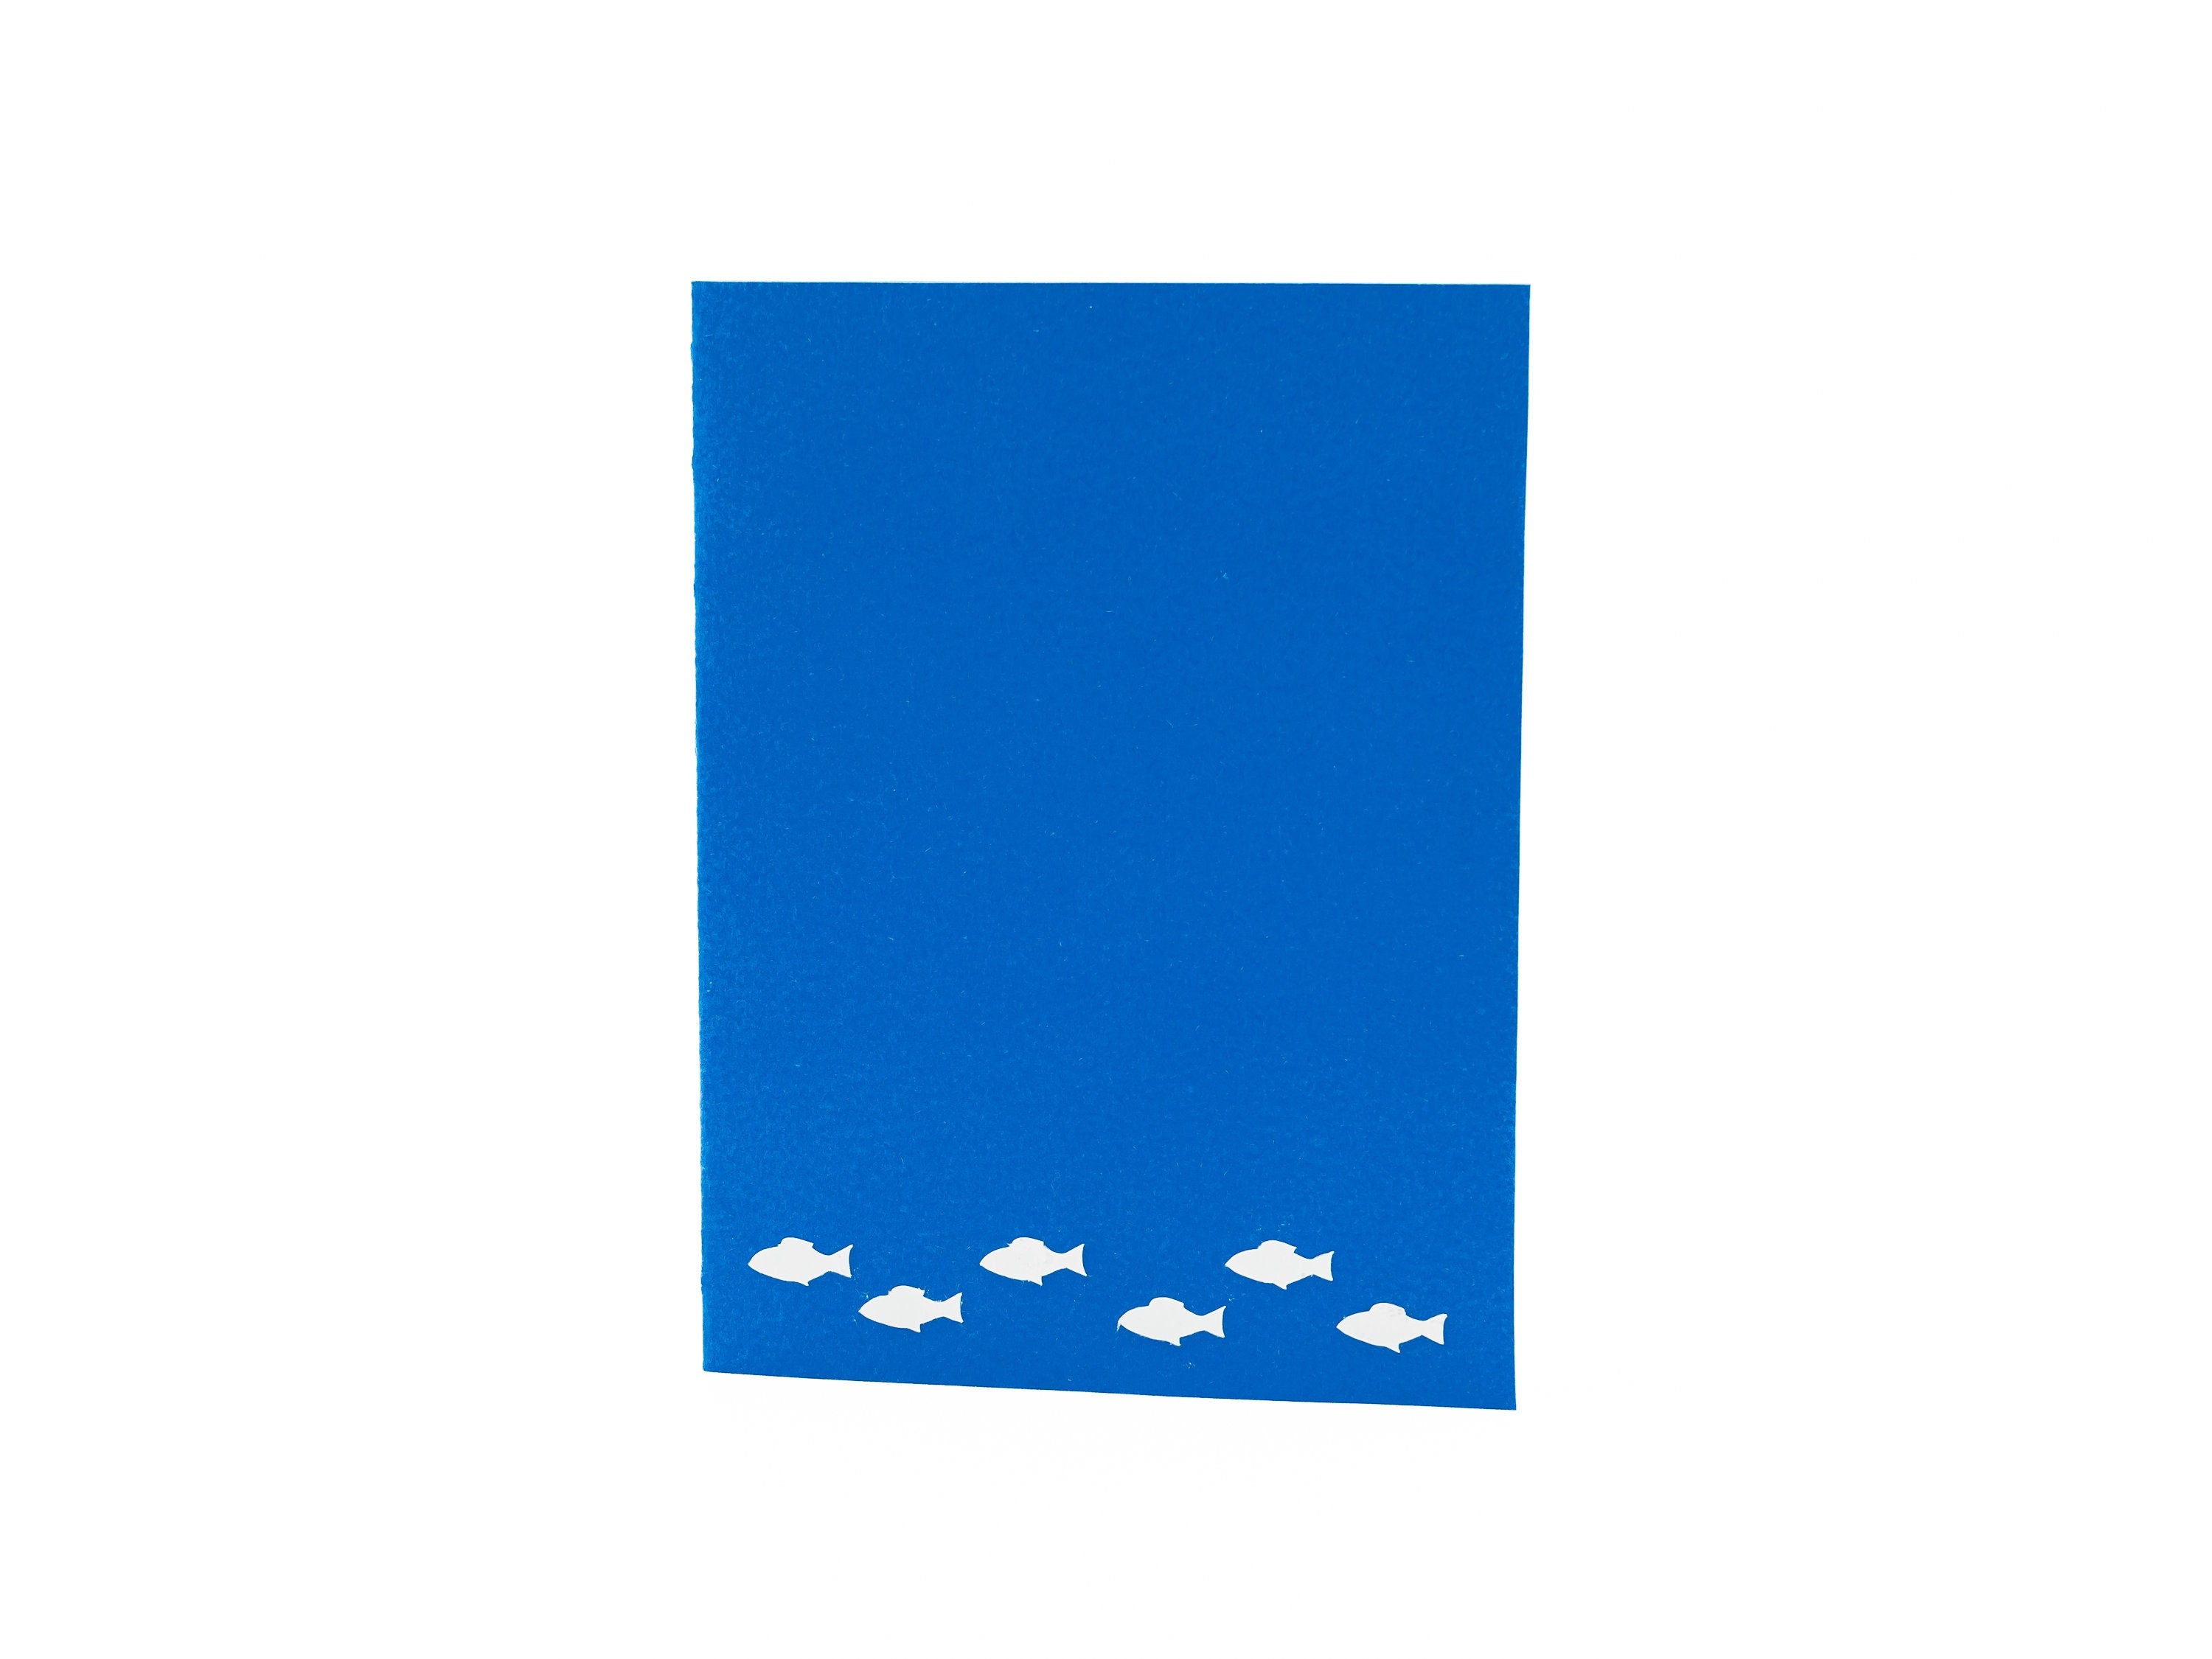 Leaping Dolphins 3D Pop Up Card | Ocean Life Greeting Card | Handmade Nautical Gift | Deep Sea Decor | Marine Wildlife Design | Cute Animal